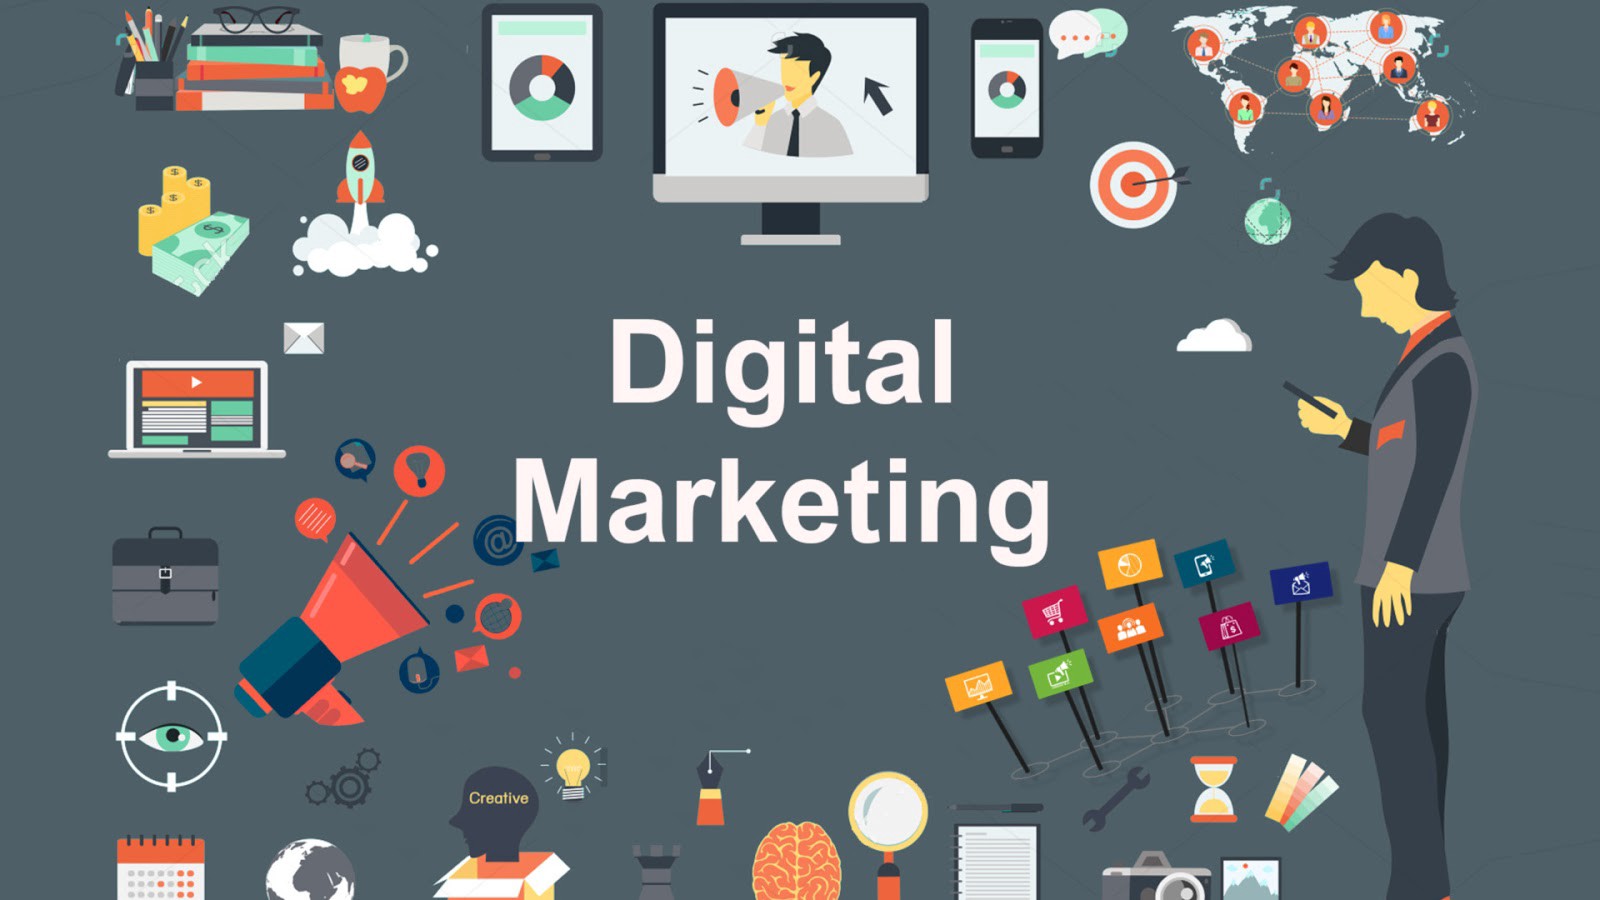 Digital Marketing guide